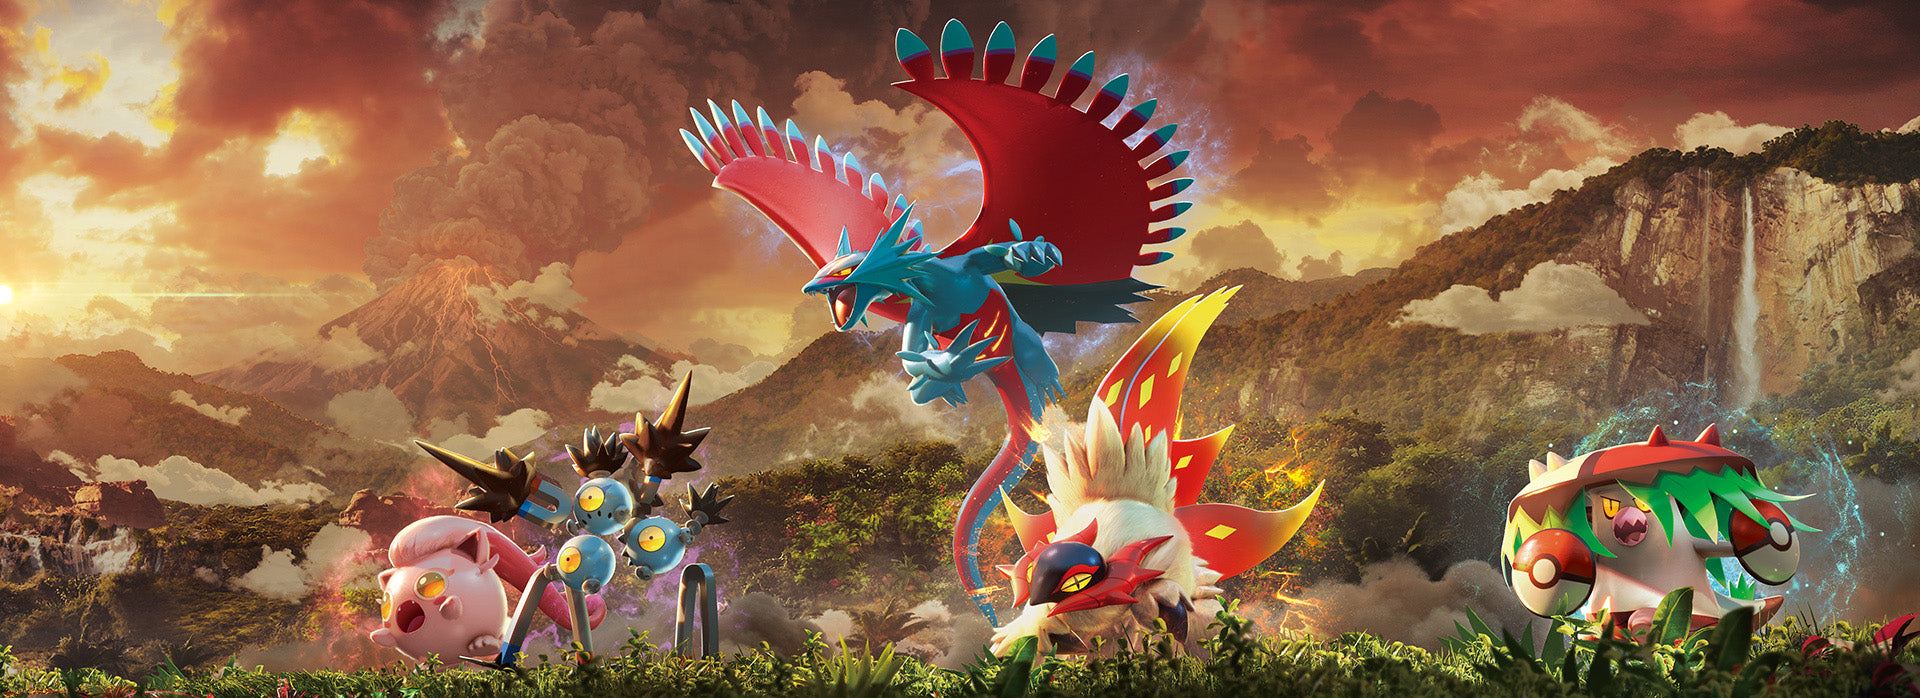 Pokémon TCG Japan's Ancient Roar & Future Flash: Slither Wing